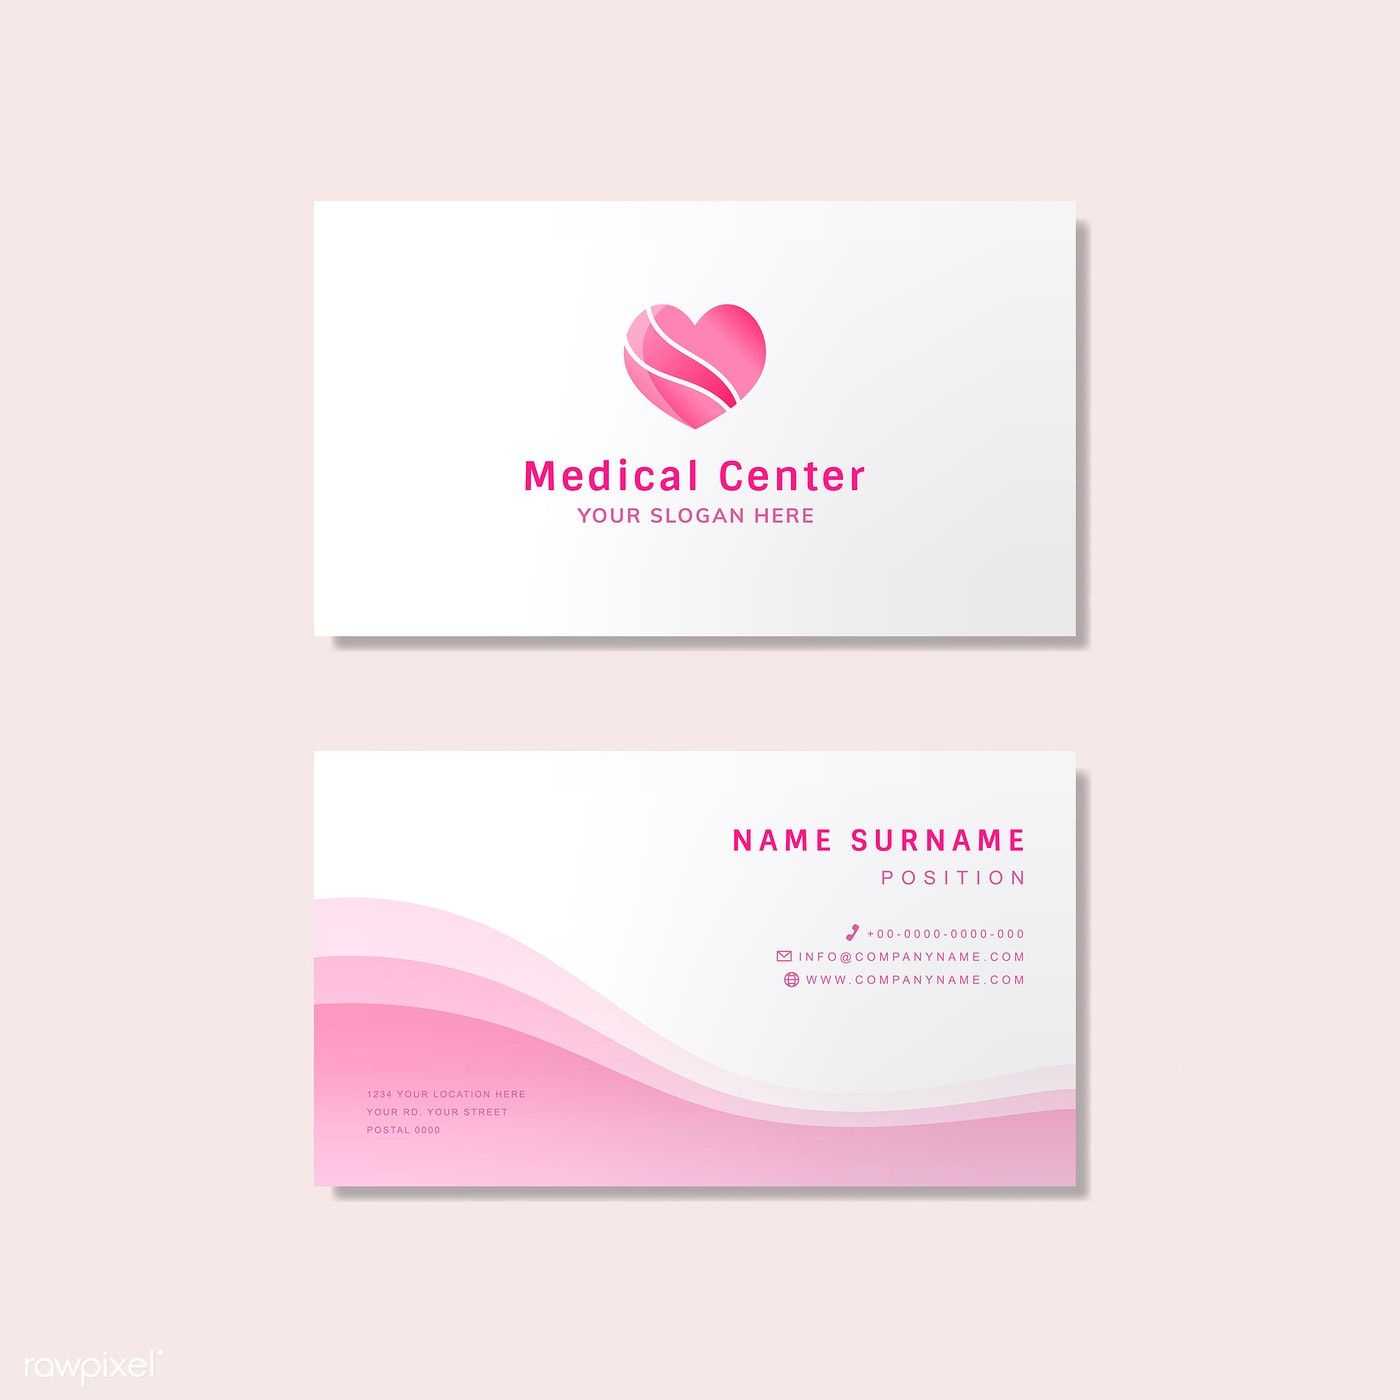 Medical Professional Business Card Design Mockup | Free Regarding Medical Business Cards Templates Free